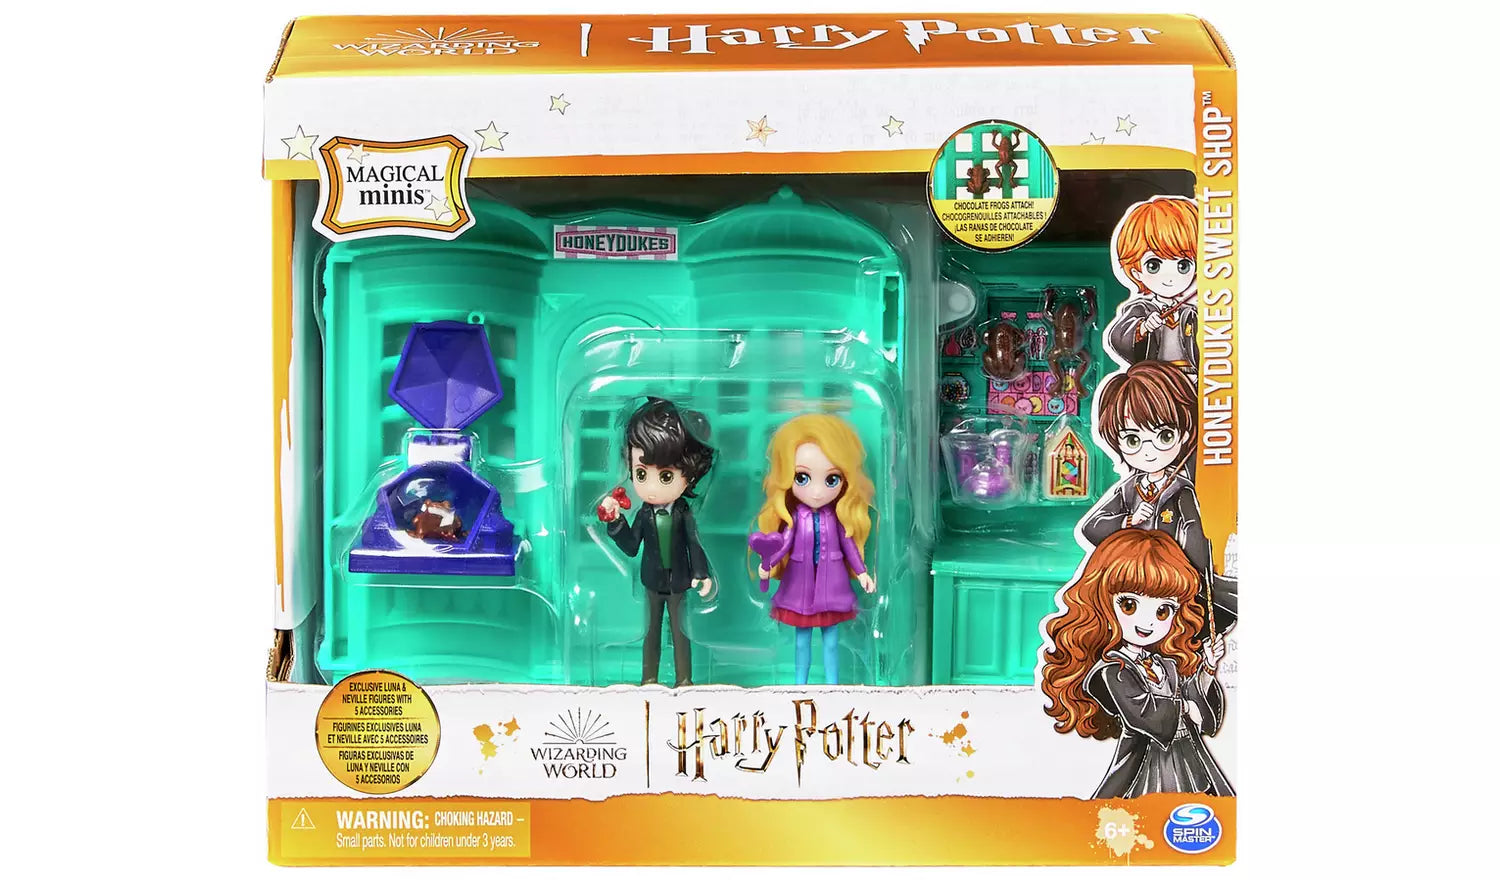 Ww Magicalmini Harry Potter Honey duke's plyst- Neville & Luna